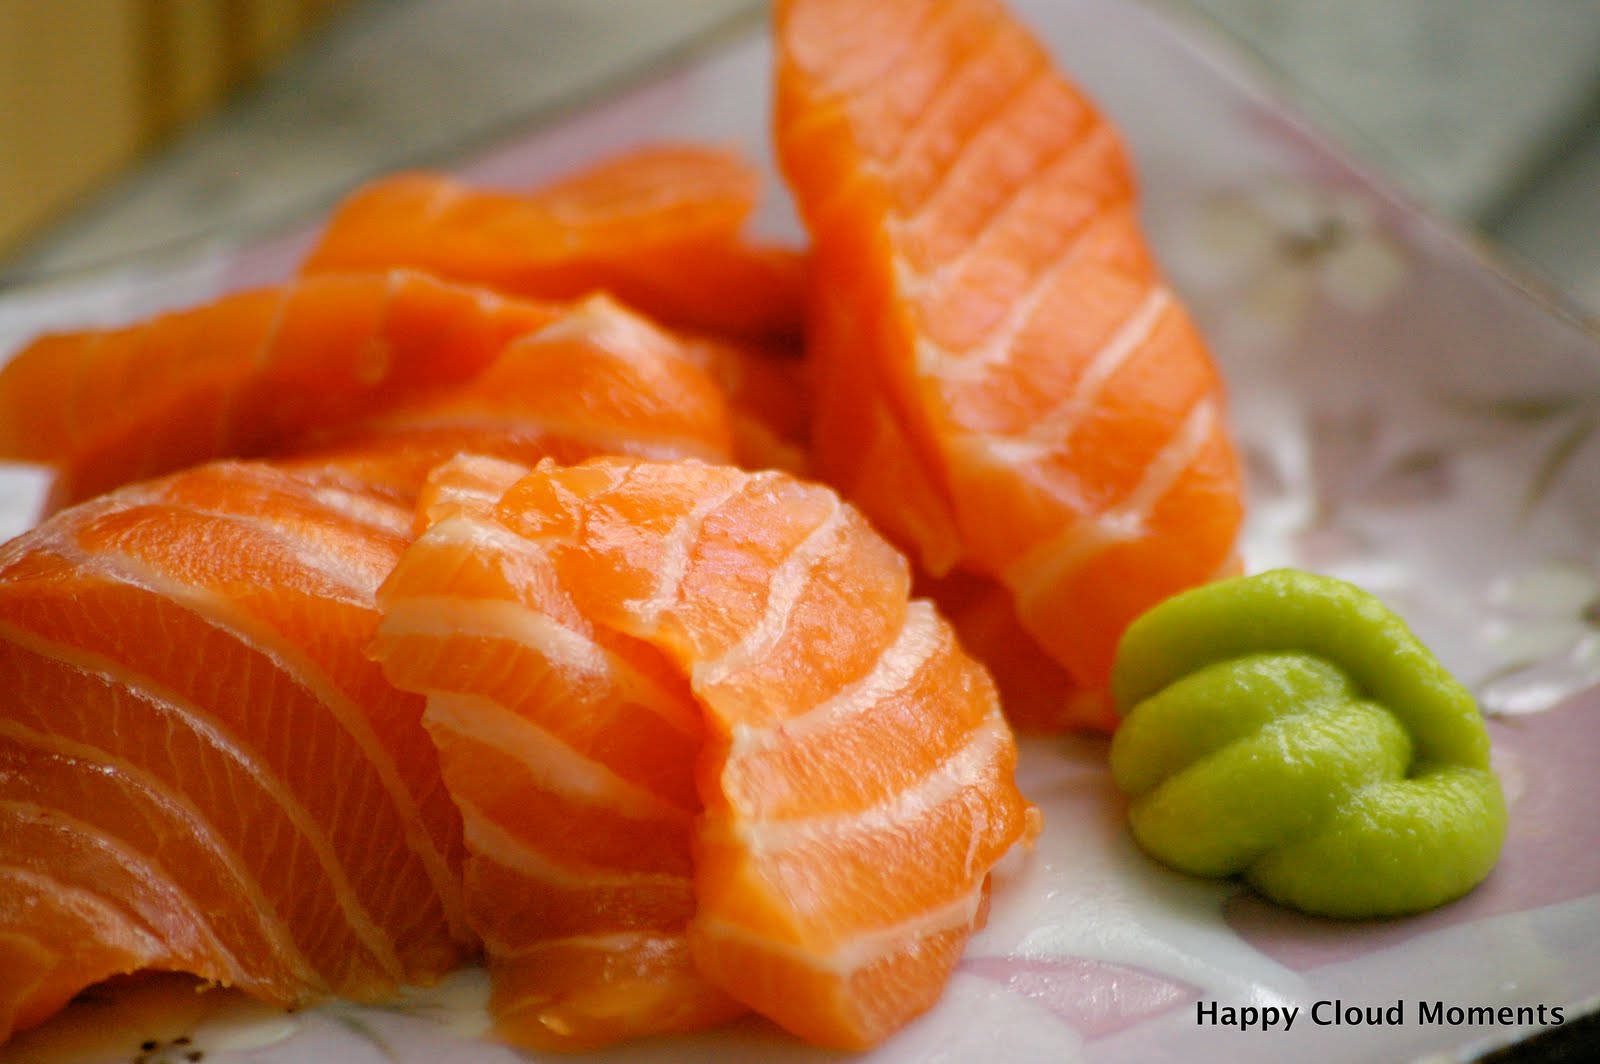 Tataki Angebratener Sashimi Thunfisch Mit Sesamgurkensalat — Rezepte Suchen